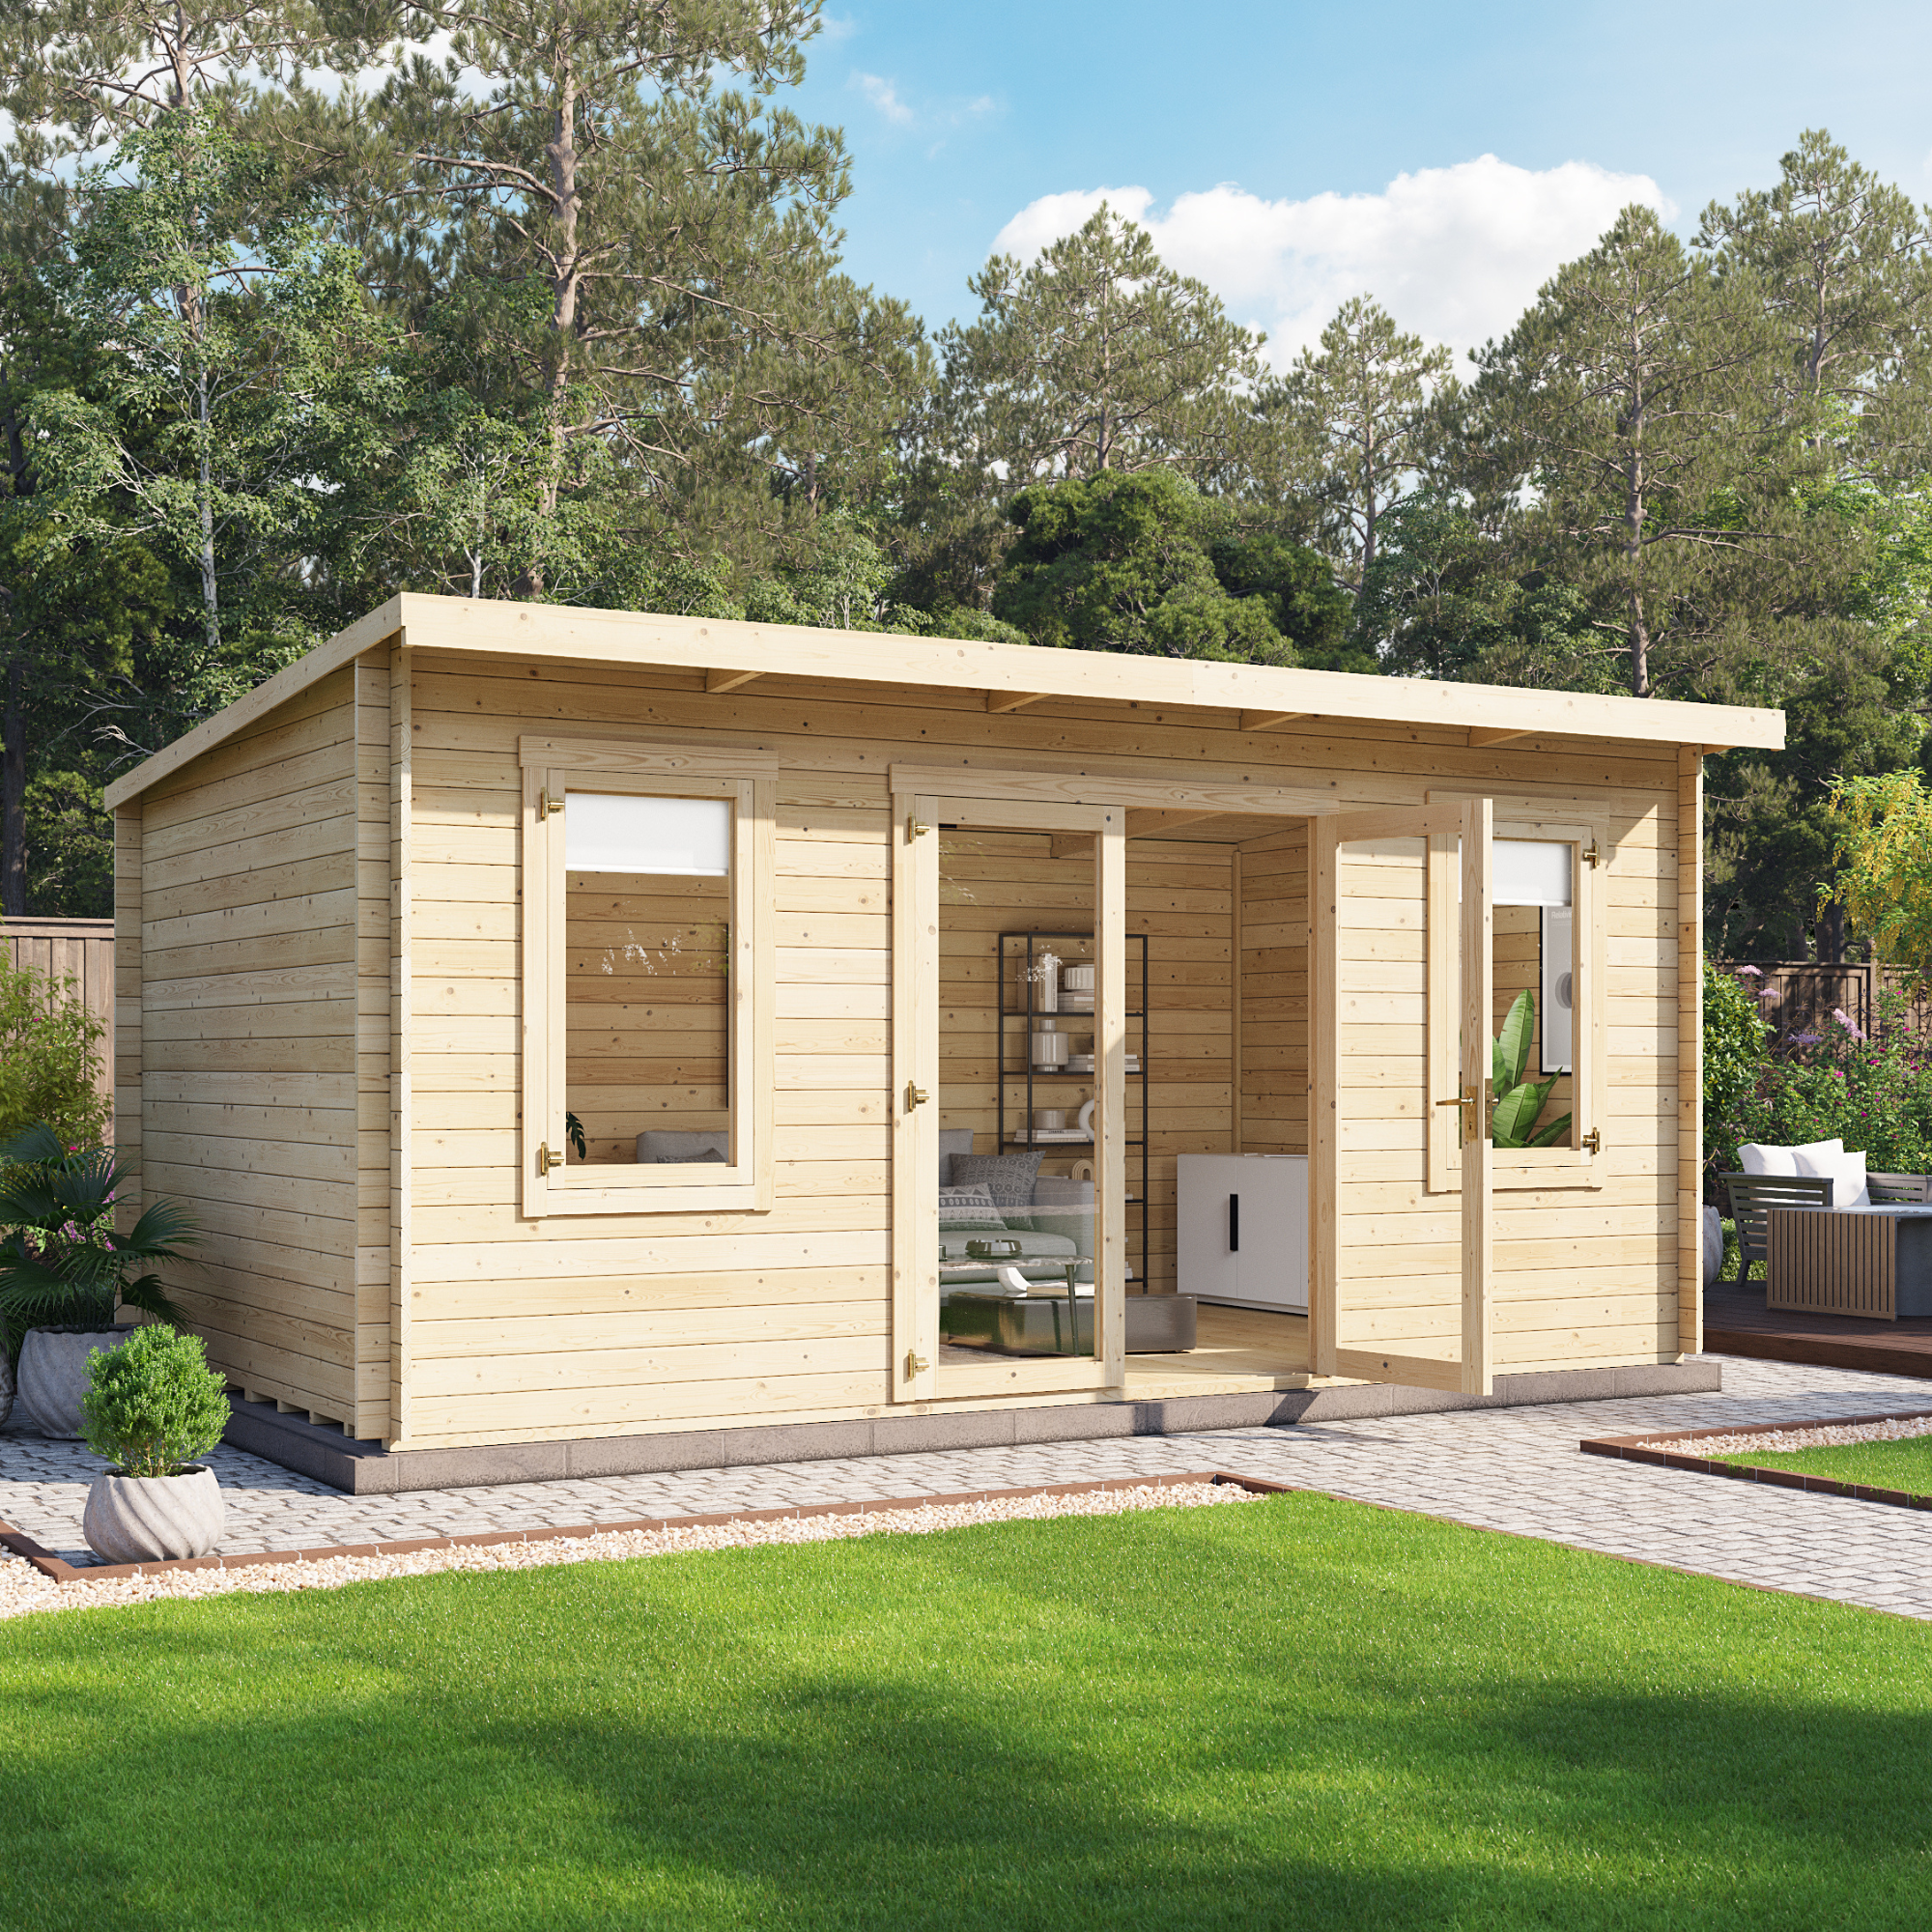 5 x 3 Log Cabin - BillyOh Fraya Pent Log Cabin - 44mm Thickness Wooden Log Cabin Summer House - 5m x 3m